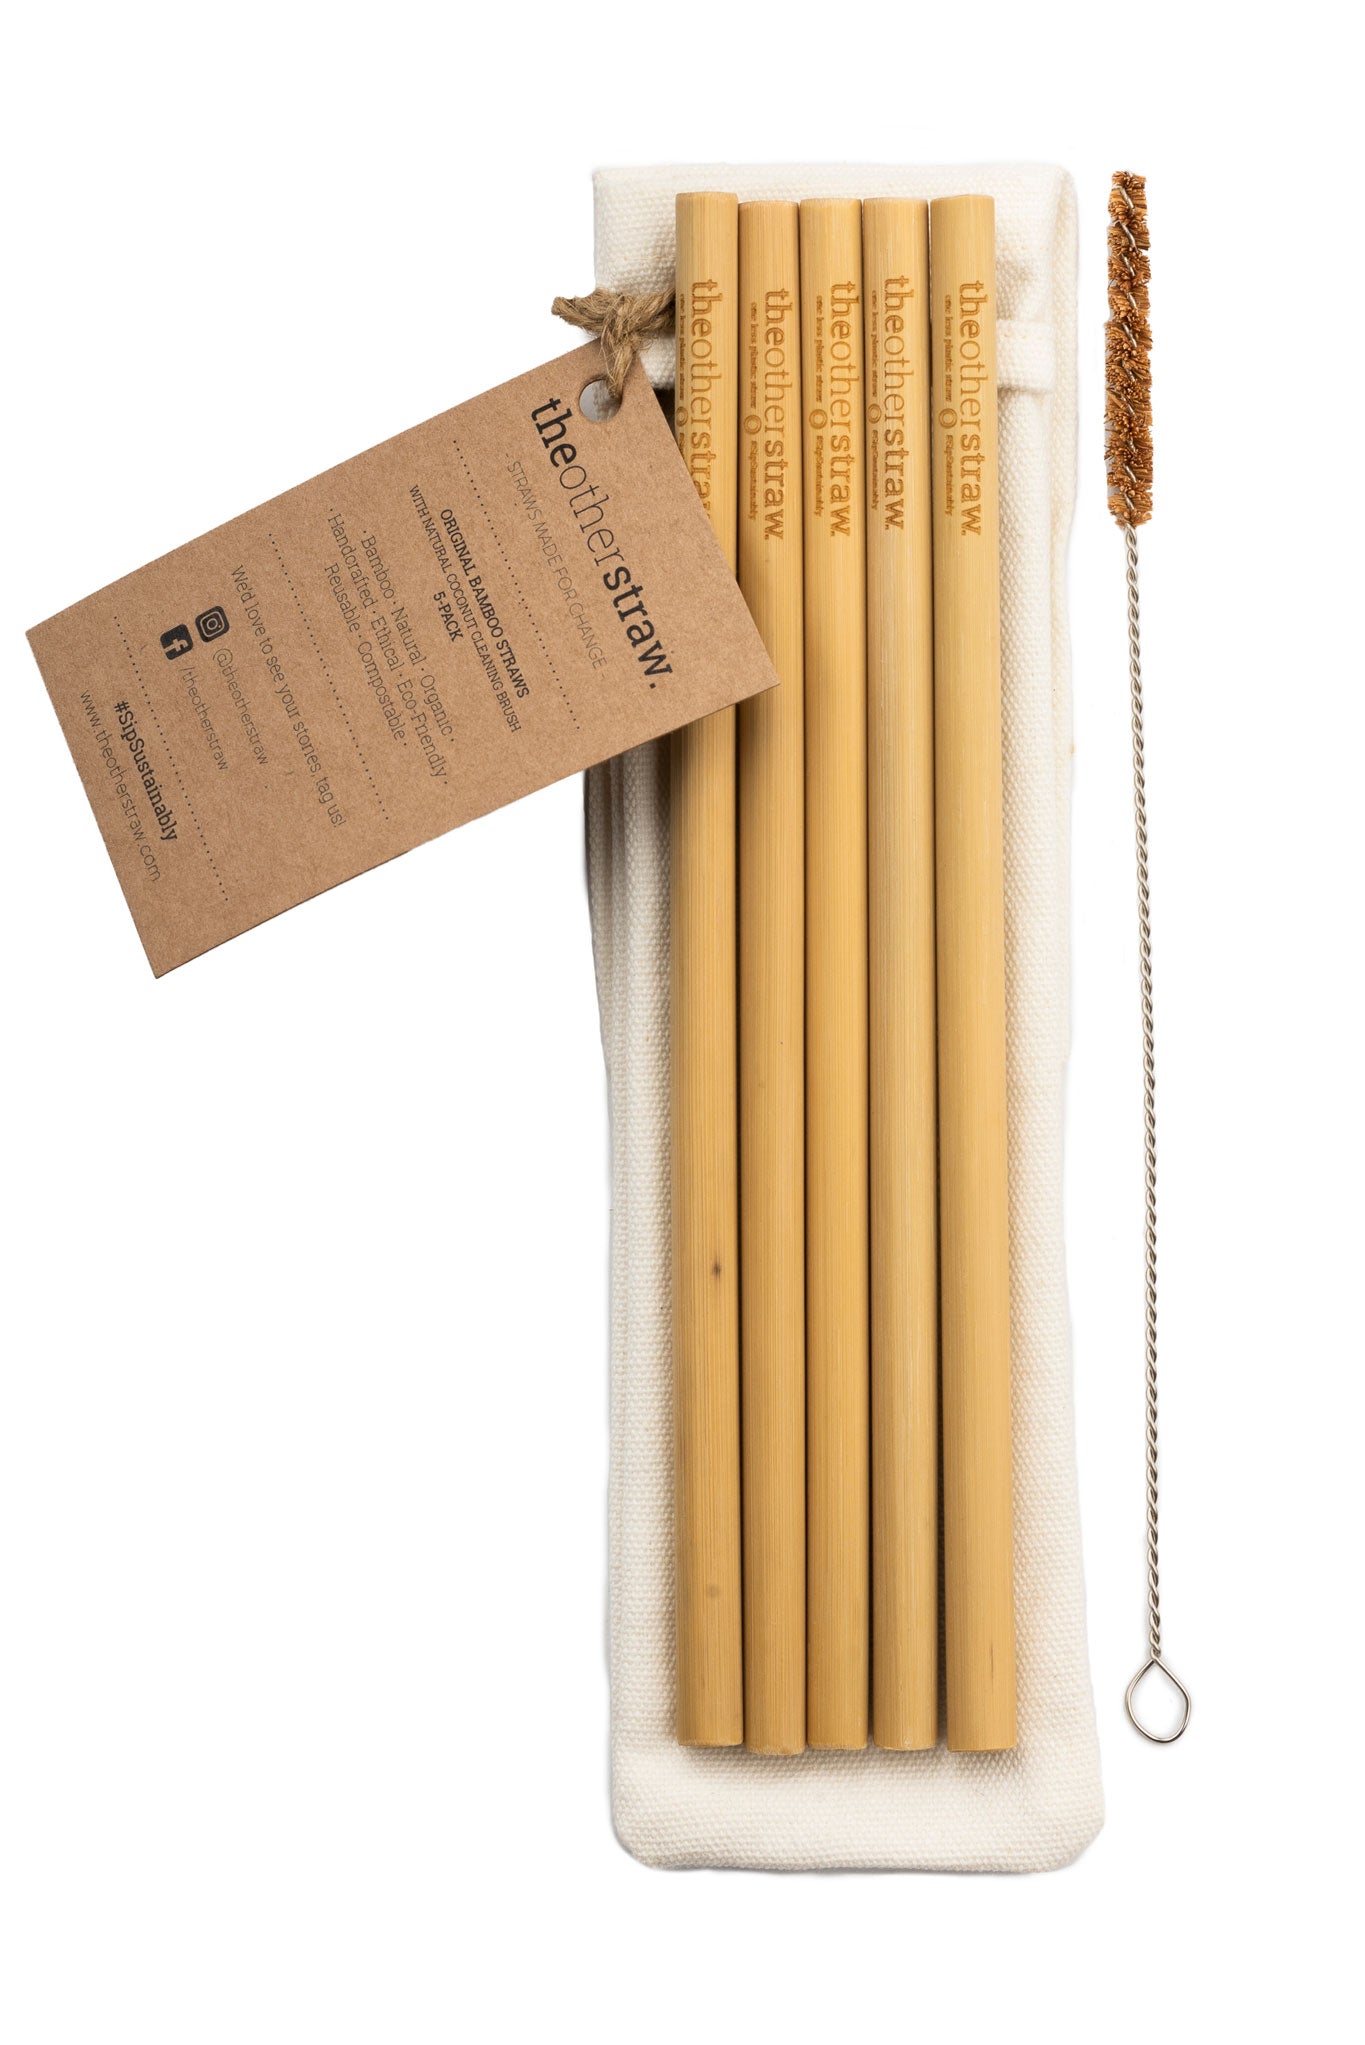 Bulk Bamboo Drinking Straws - Brush with Bamboo